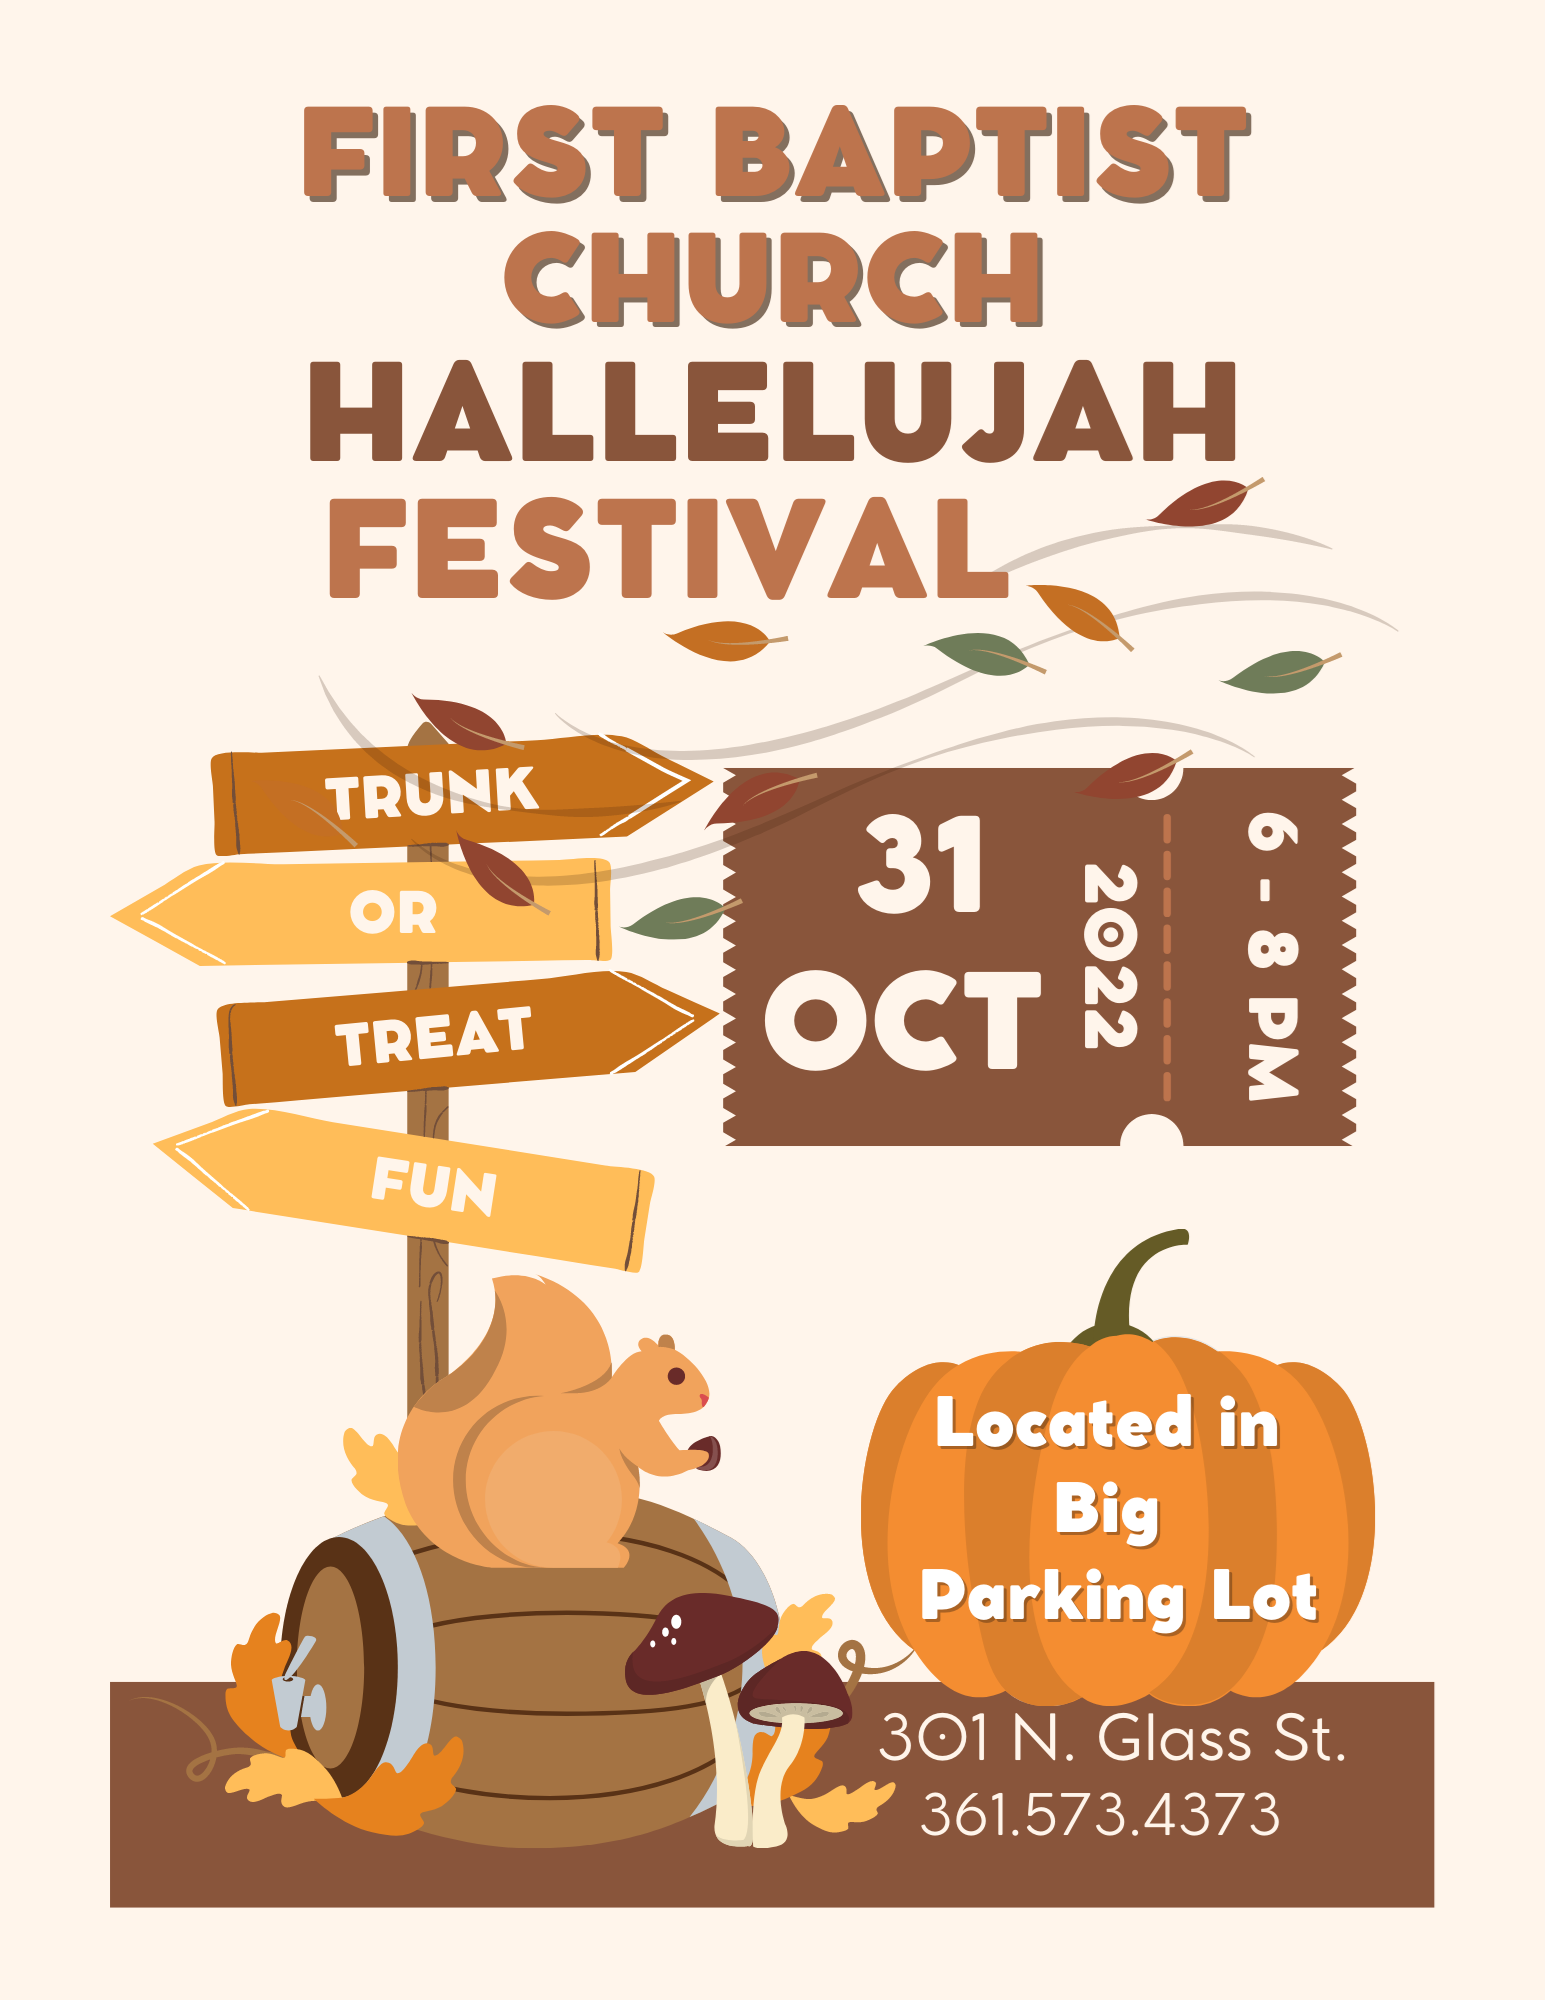 Hallelujah Festival (Trunk or Treat)